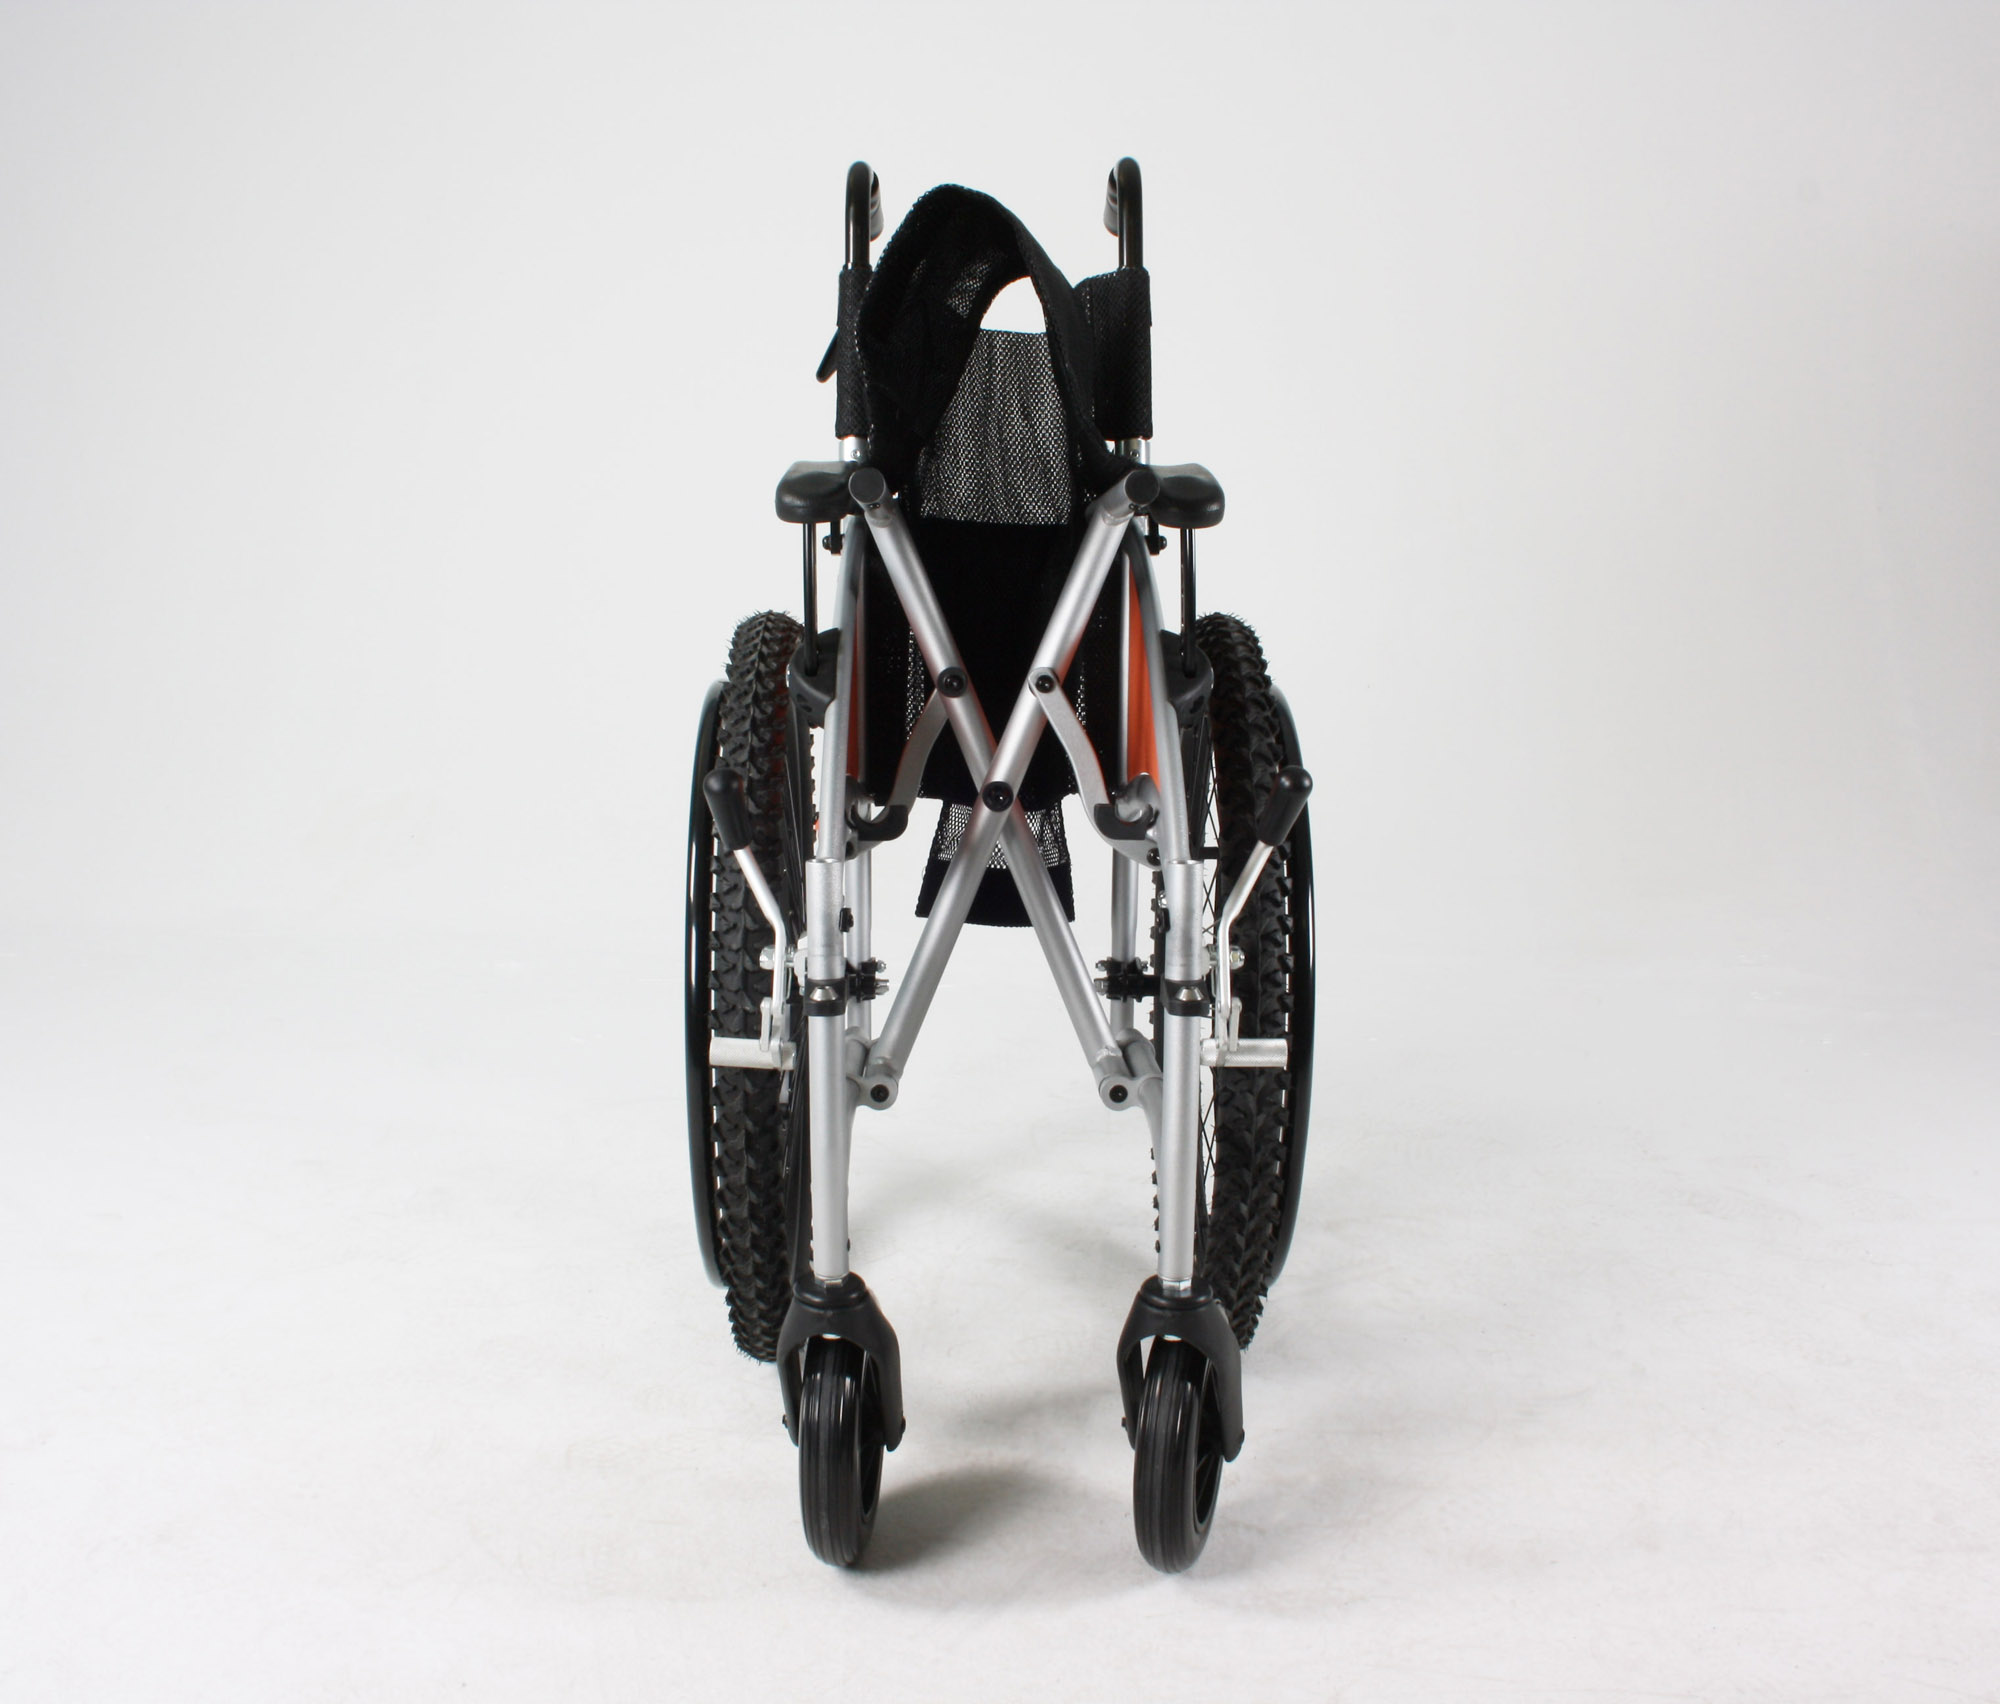 Excel G-Explorer Off Road Wheelchair